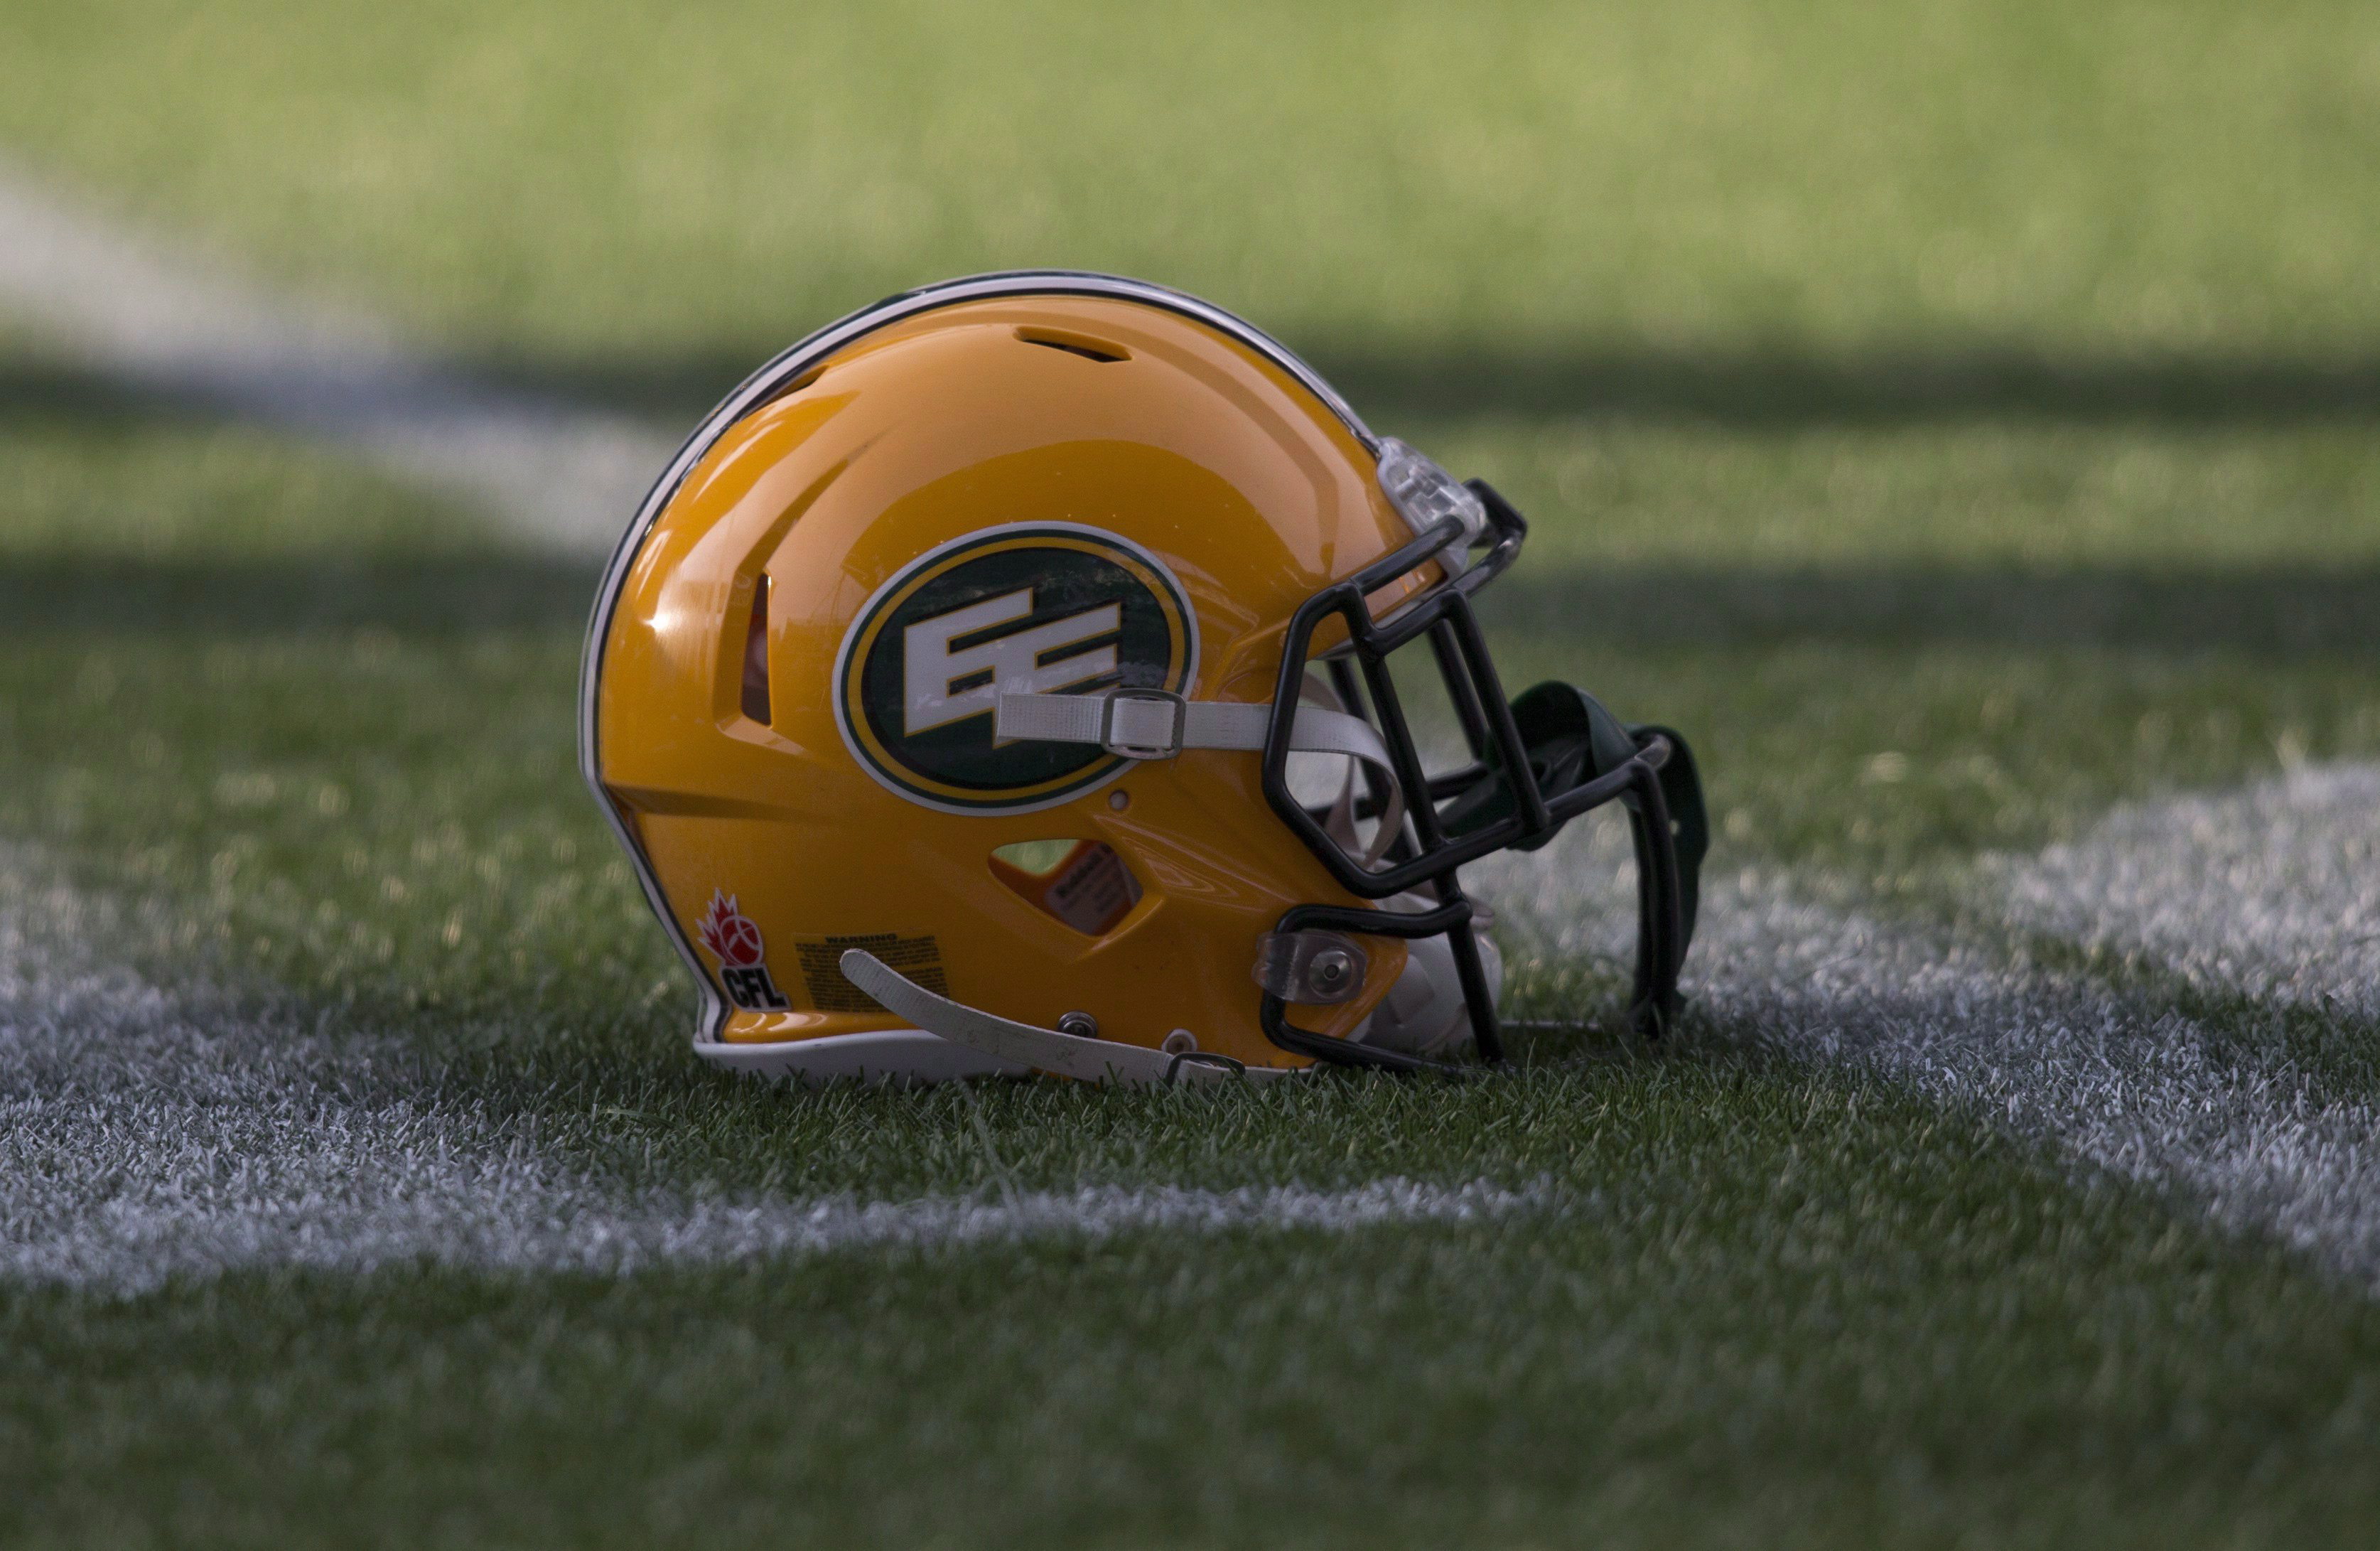 Edmonton Elks unveil new helmet with classic 'EE' logo - Edmonton